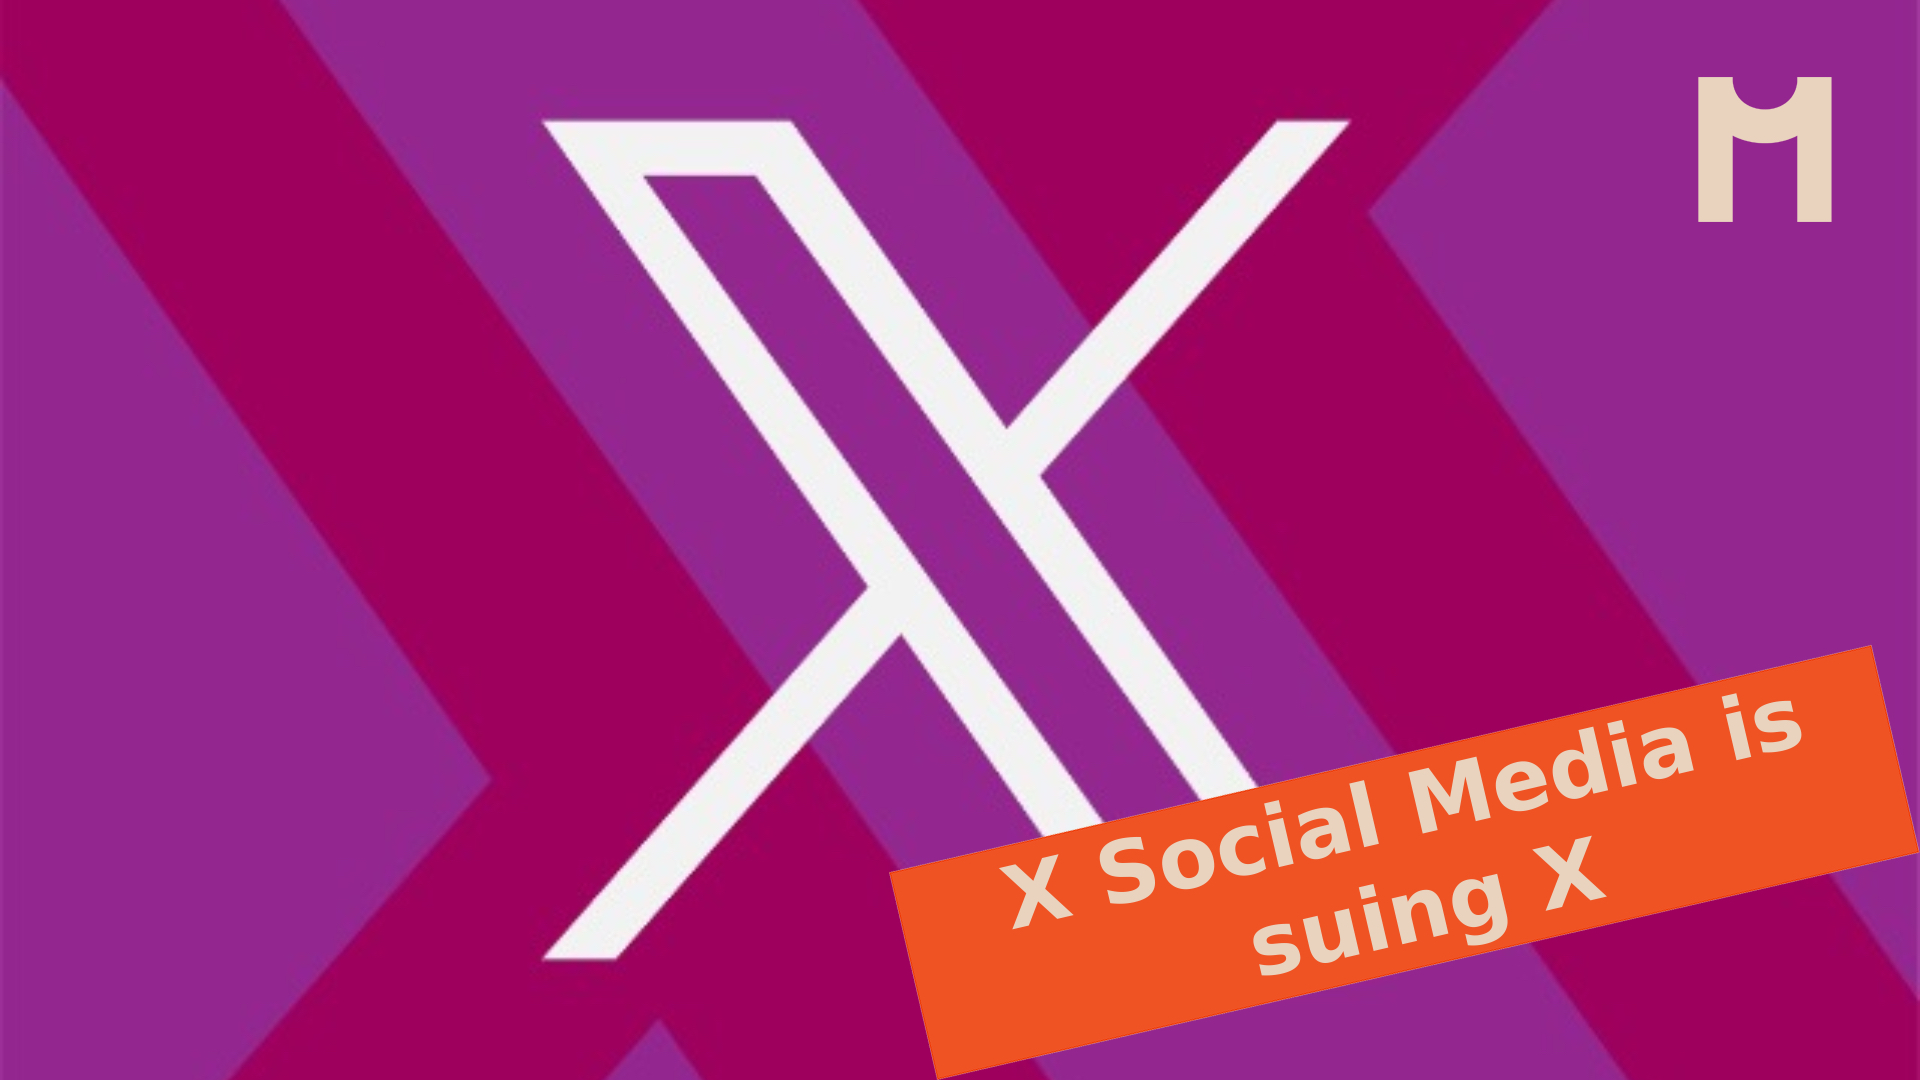 X Social Media is suing X, a social media company